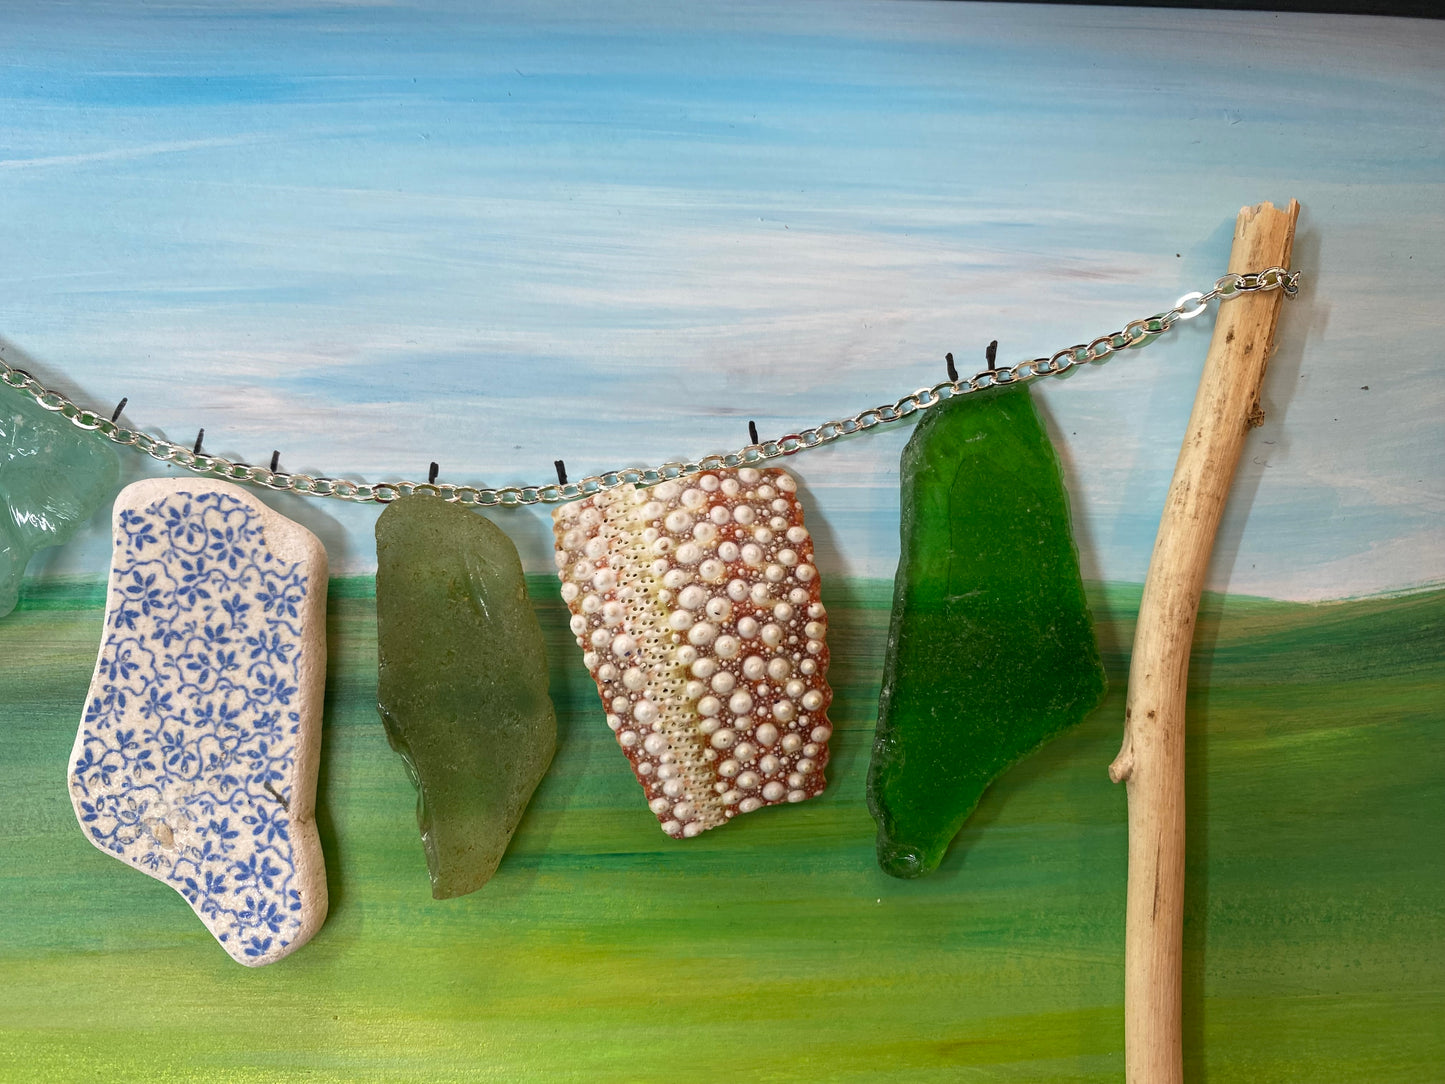 Washing line inspired artwork - Sea glass.